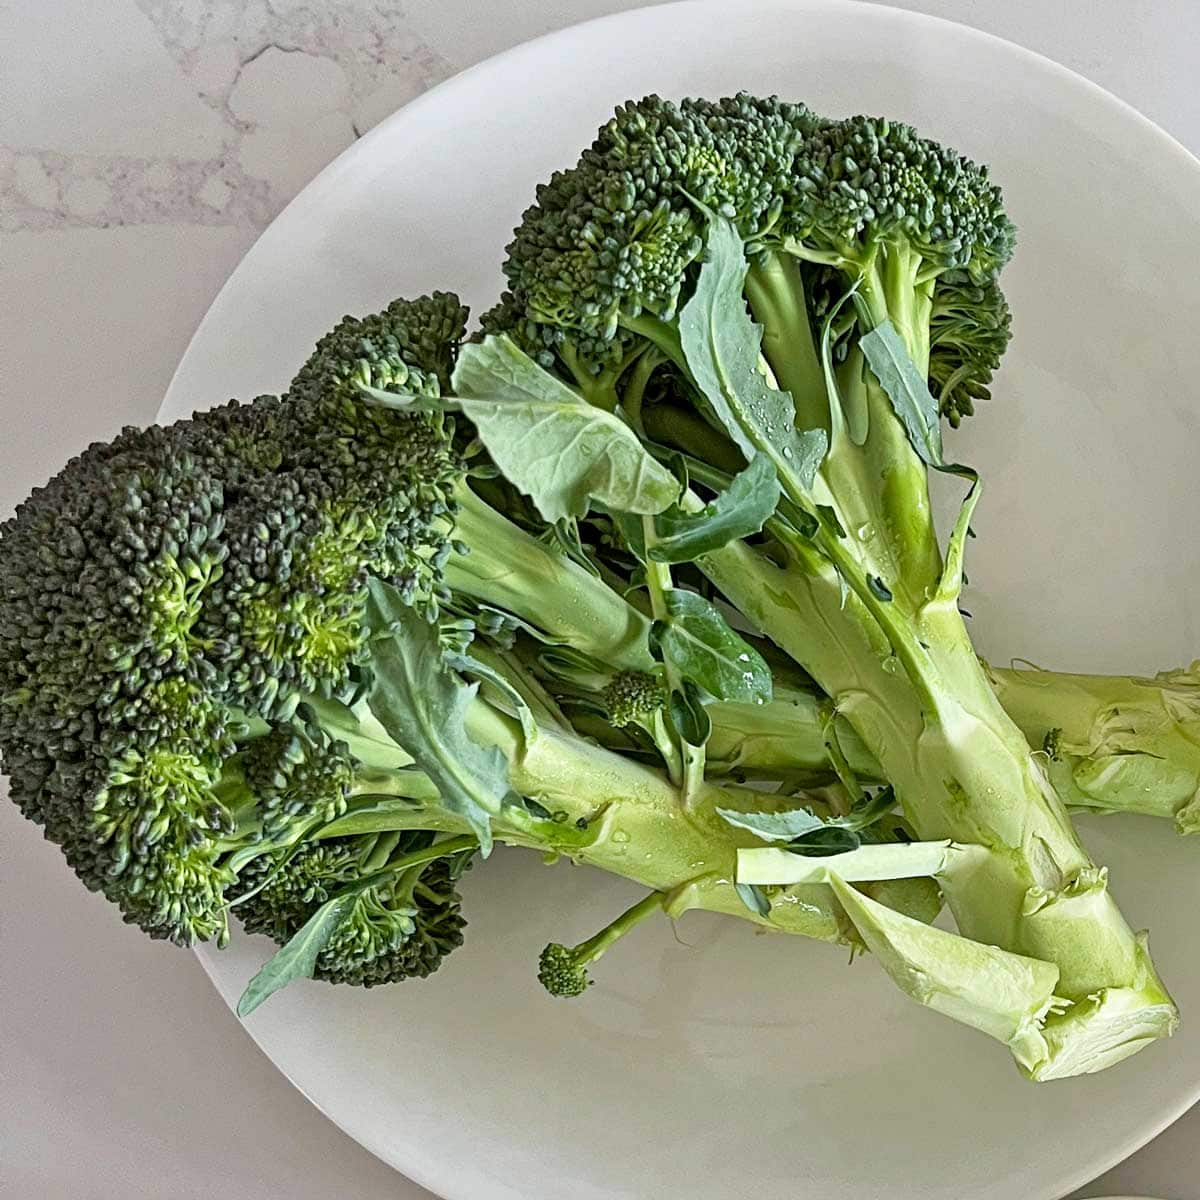 A broccoli bunch on a plate.